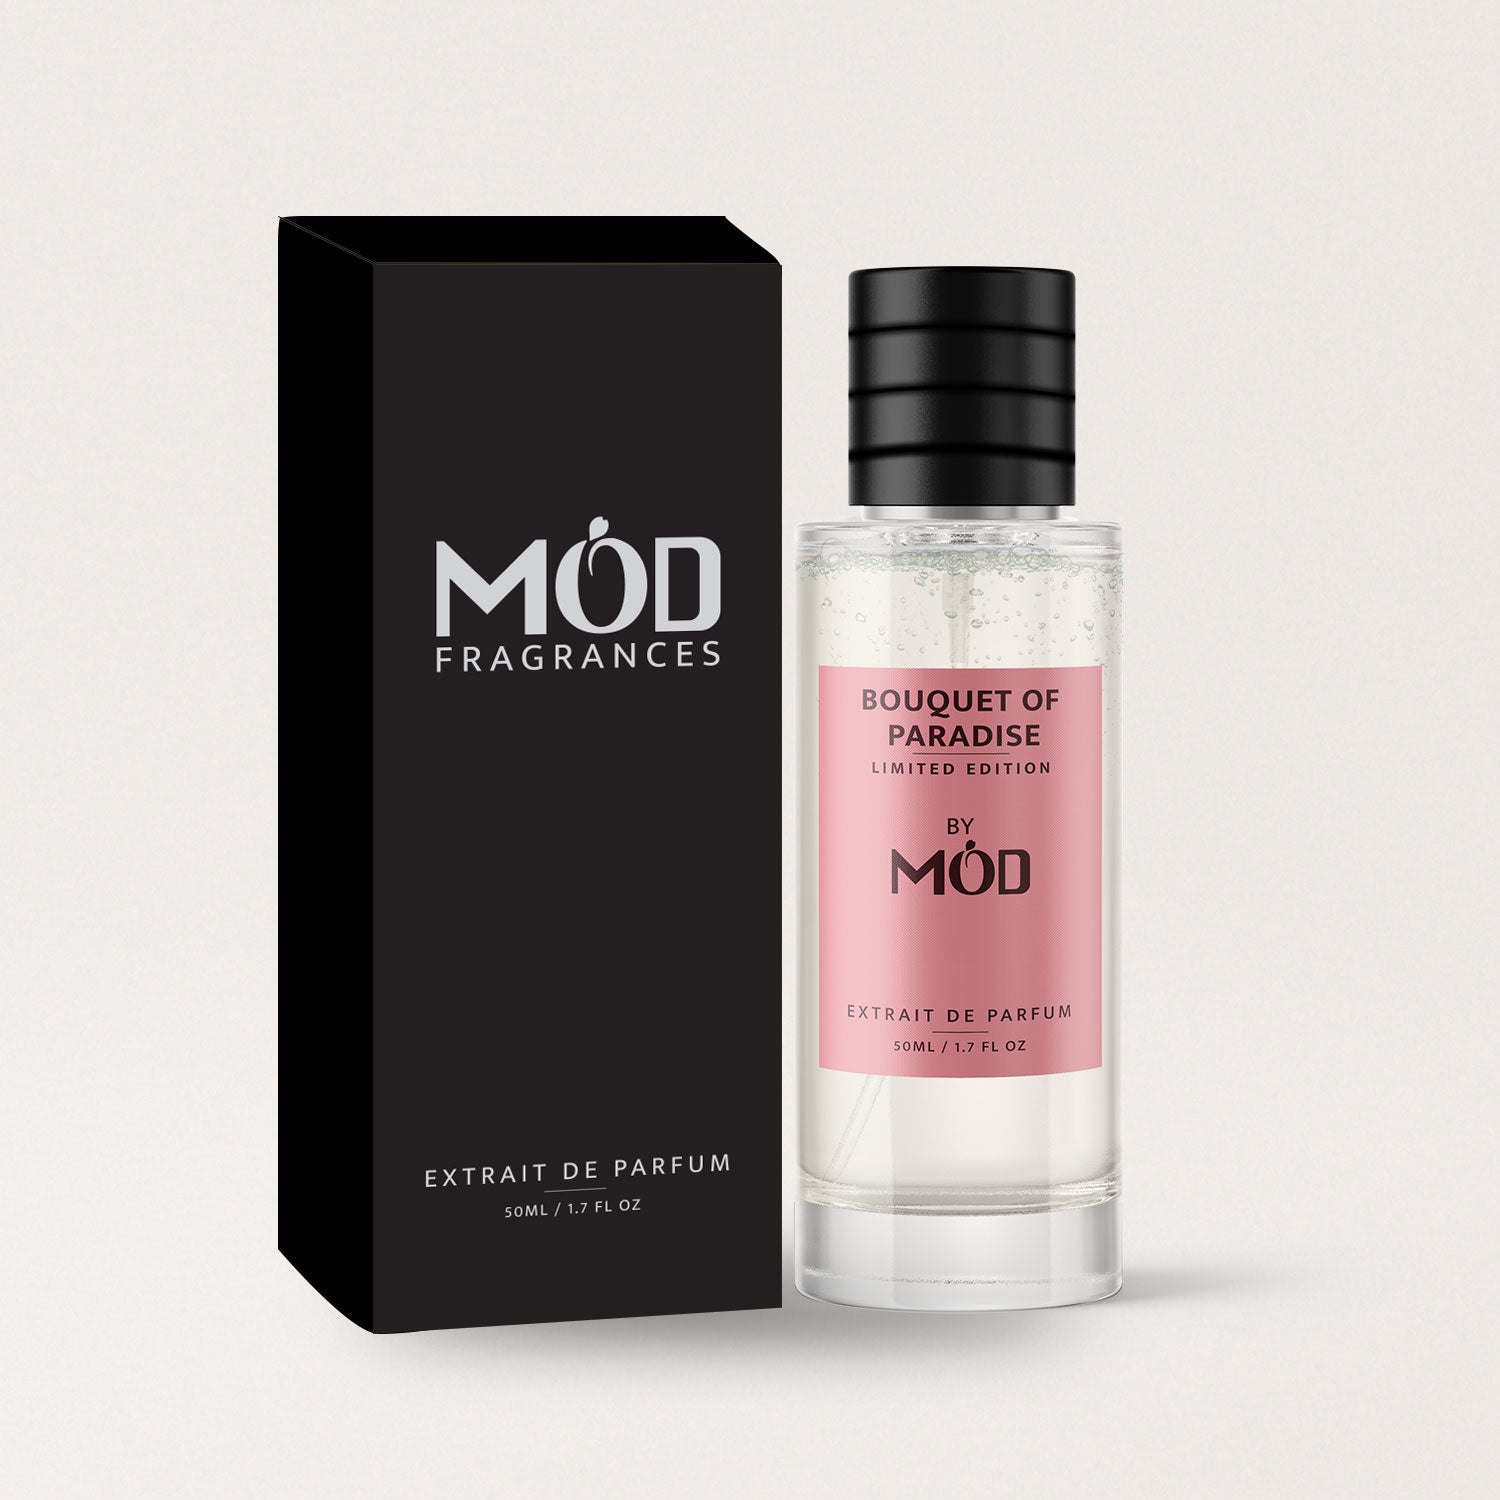 Bouquet of Paradise - Limited Edition - Mod Fragrances